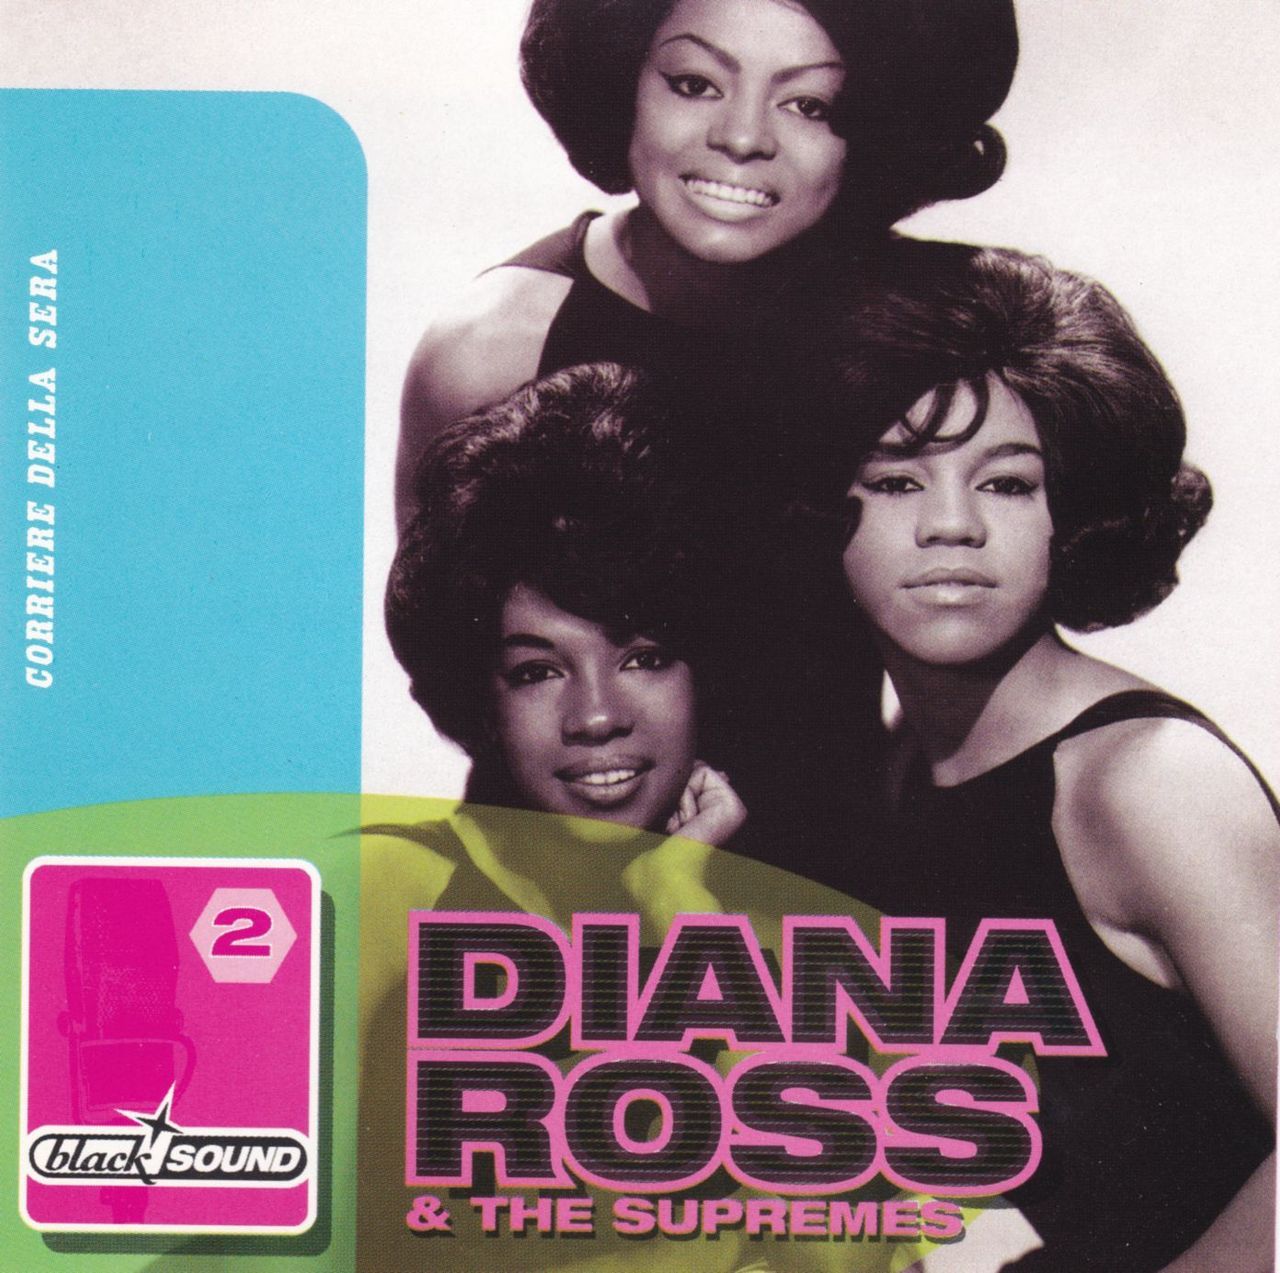 Black Sound - Diana Ross & The Supremes album art